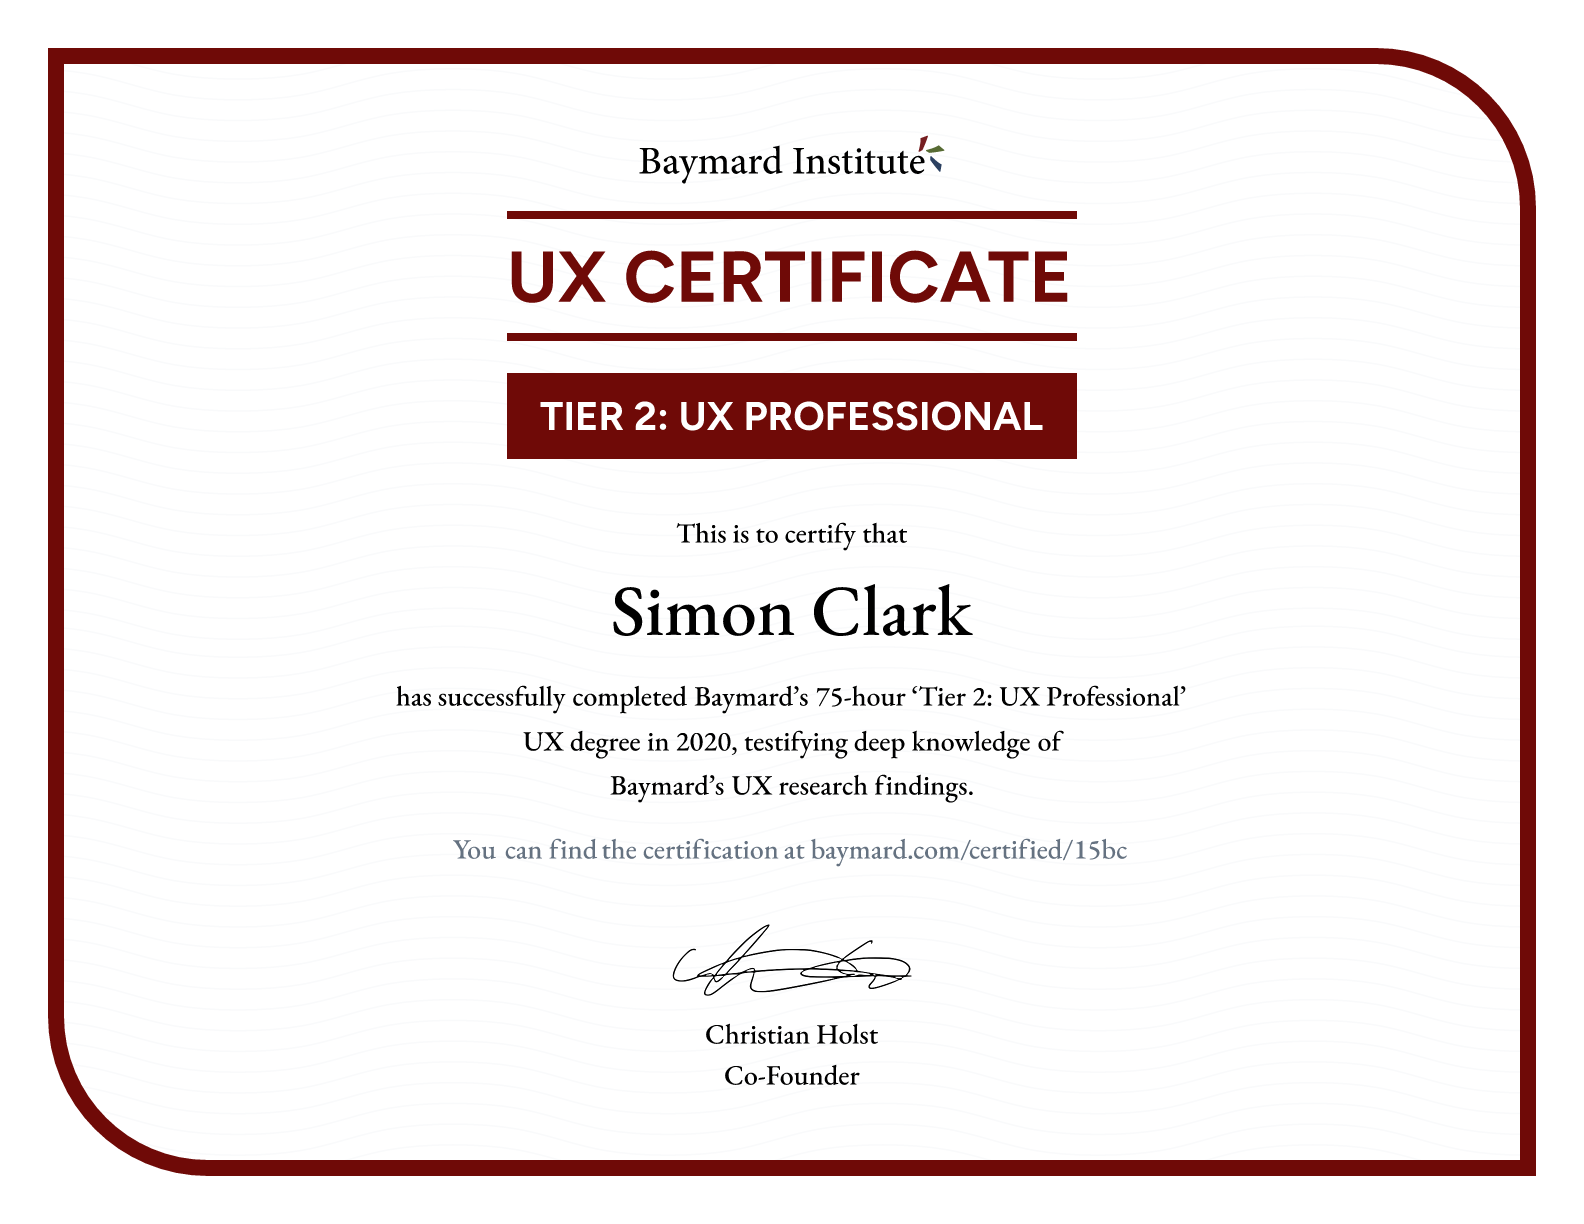 Simon Clark’s certificate